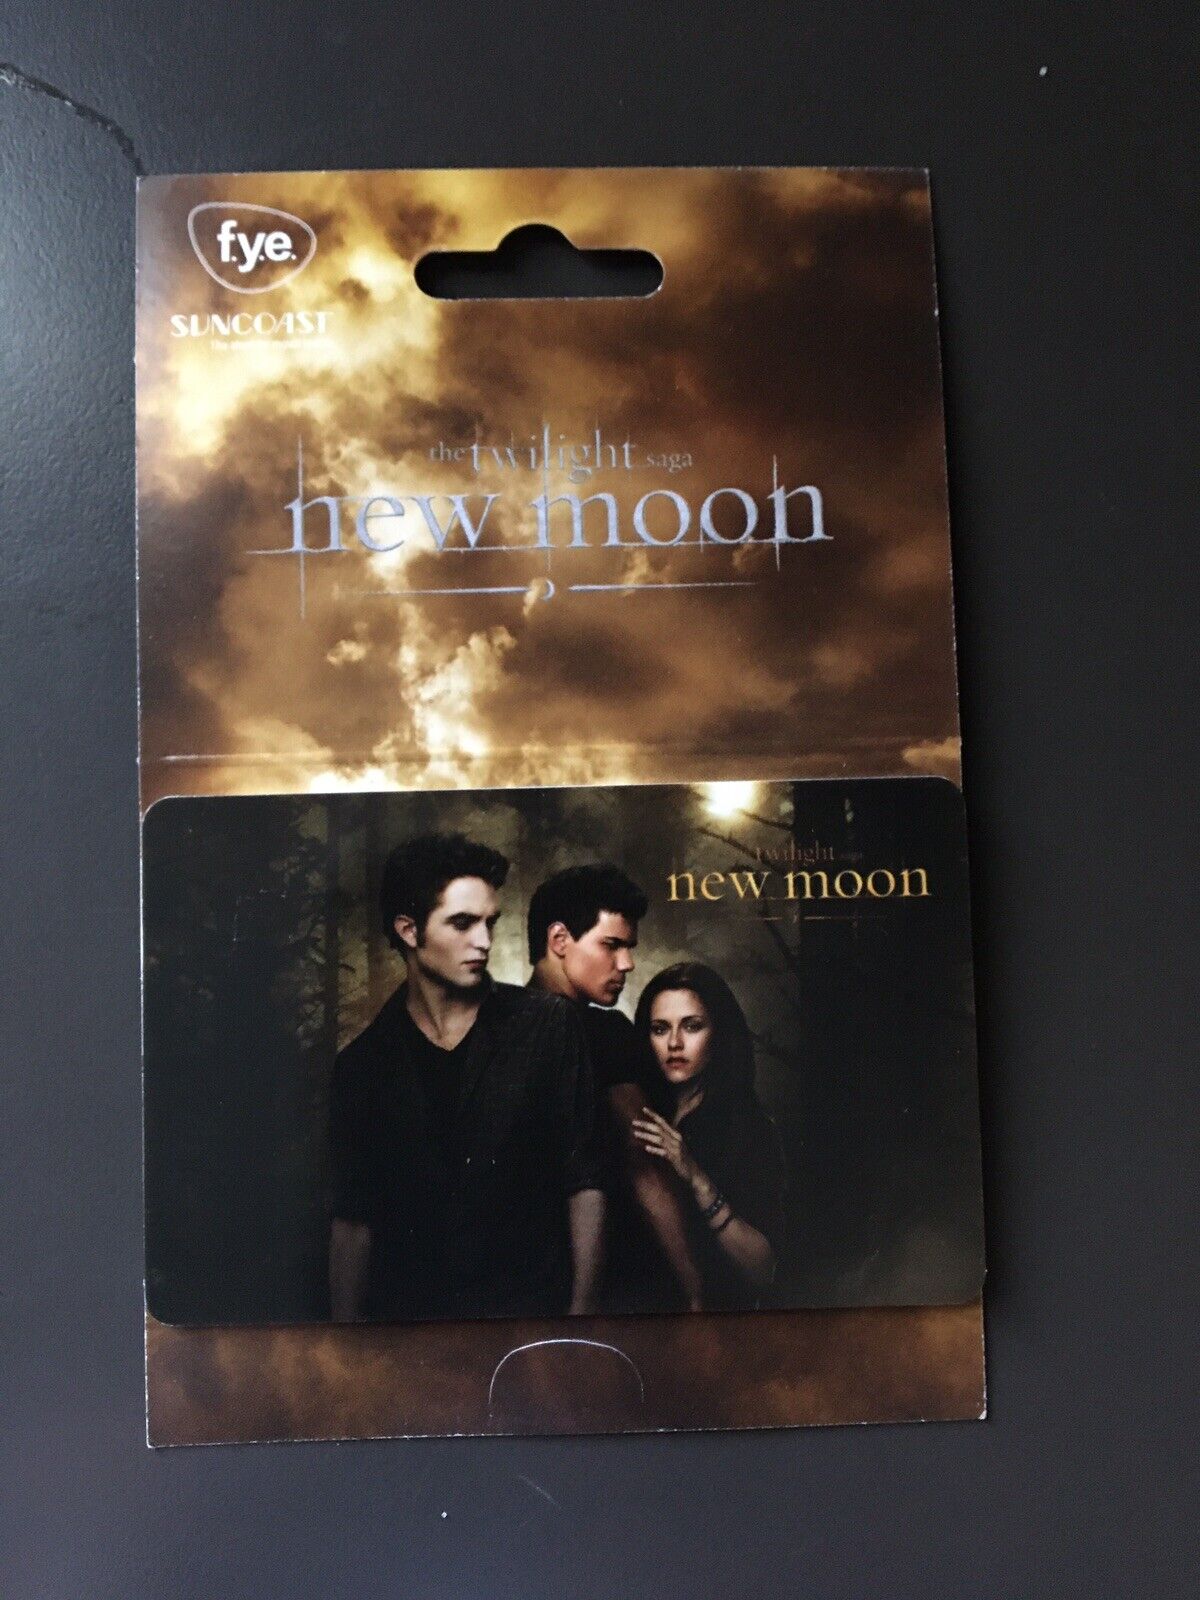 F.y.e. Twilight Saga New Moon 2009 Gift Card ( $0 )  Poster Artwork Style 1